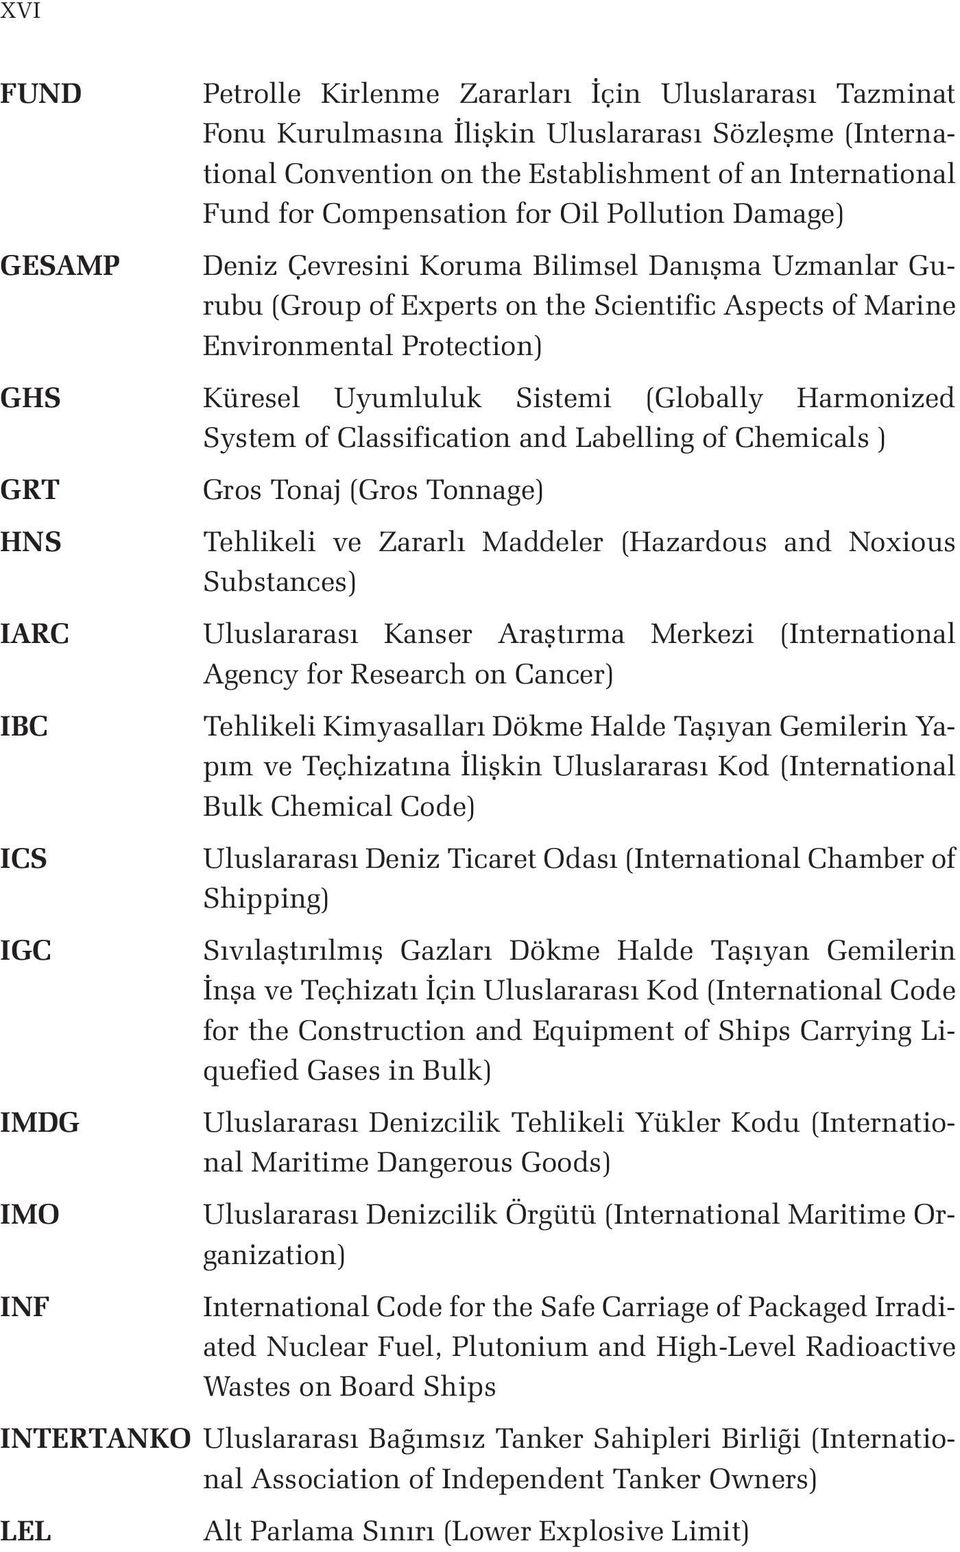 Sistemi (Globally Harmonized System of Classification and Labelling of Chemicals ) GRT HNS IARC IBC ICS IGC IMDG IMO INF Gros Tonaj (Gros Tonnage) Tehlikeli ve Zararlı Maddeler (Hazardous and Noxious